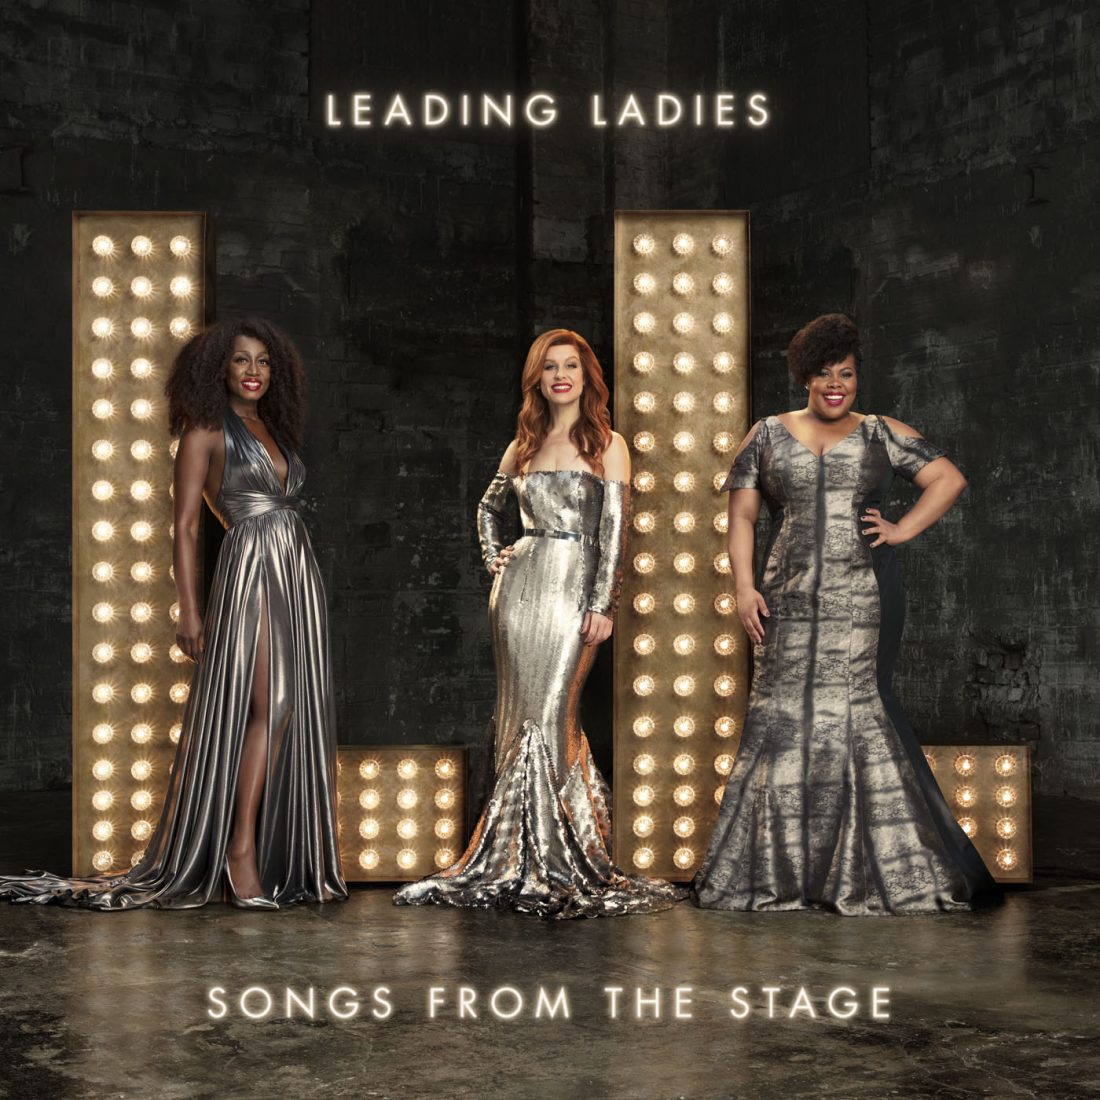 The Leading Ladies cover Hamilton tune, Helpless